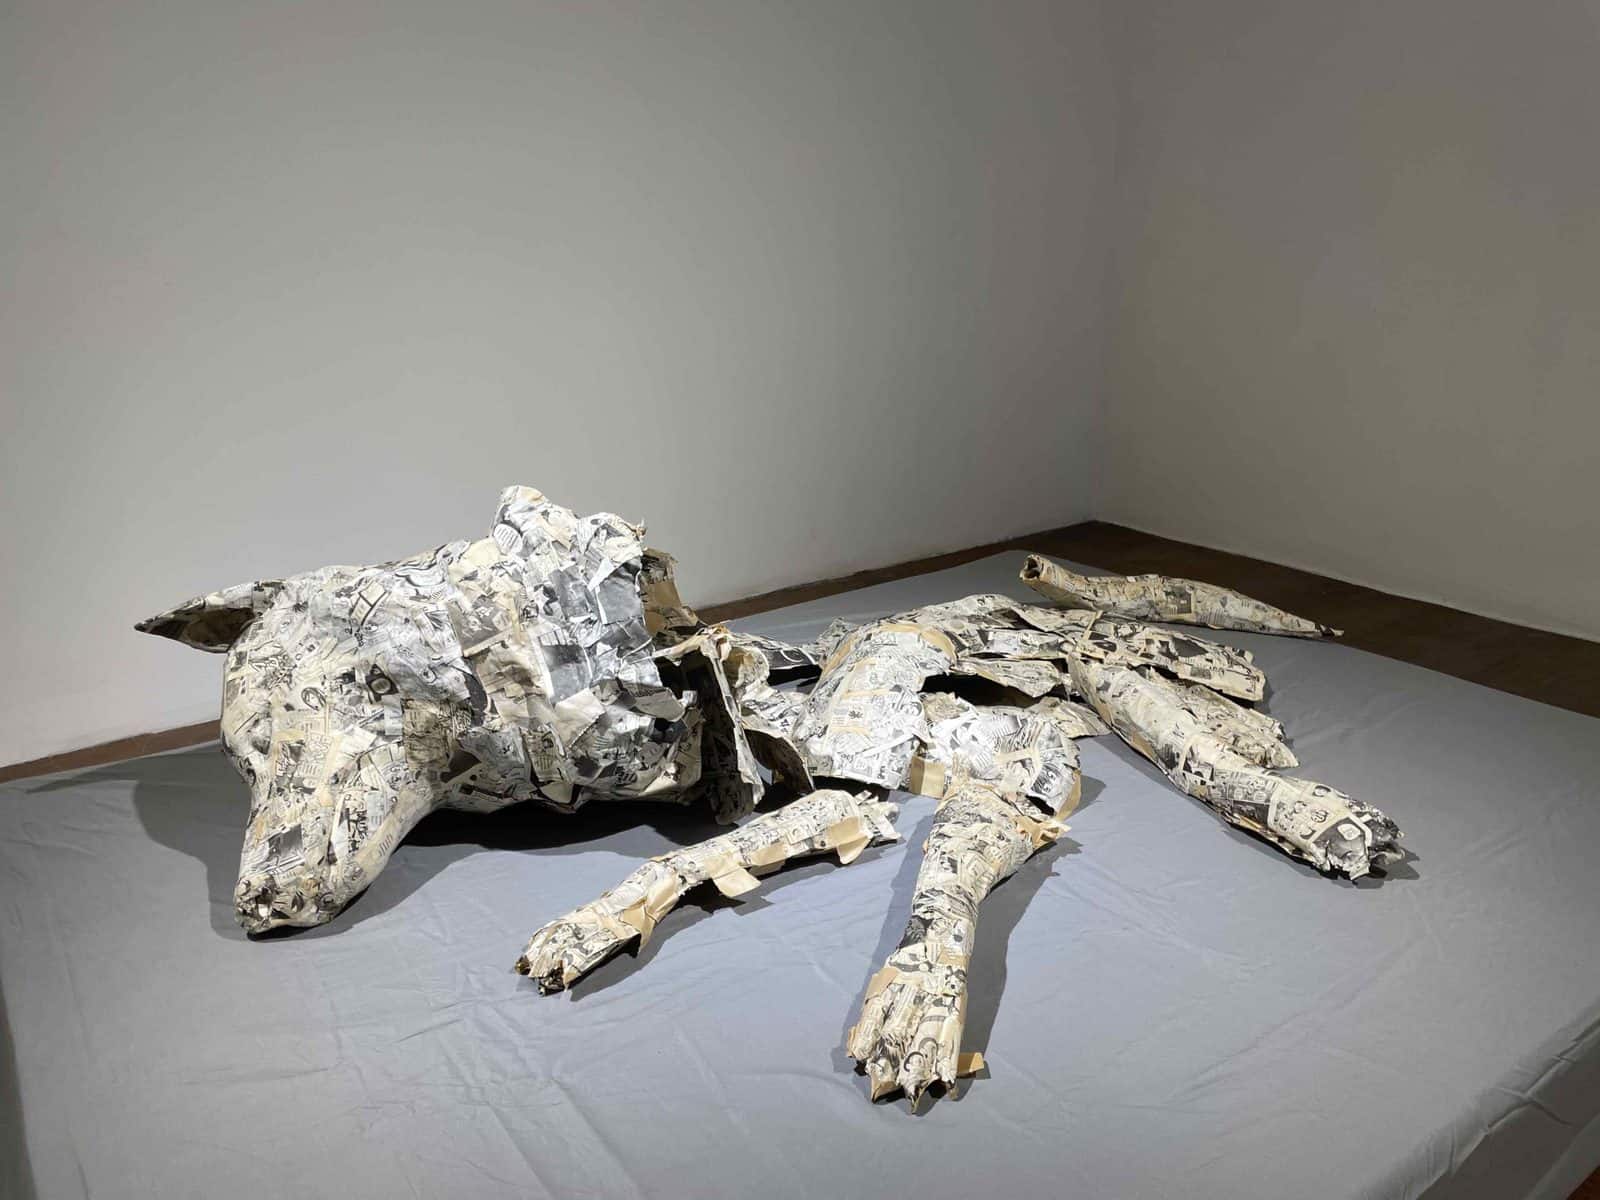 Japanese Wolf, 2018, Papier-mache’ sculpture by Ruangsak Anuwatwimon